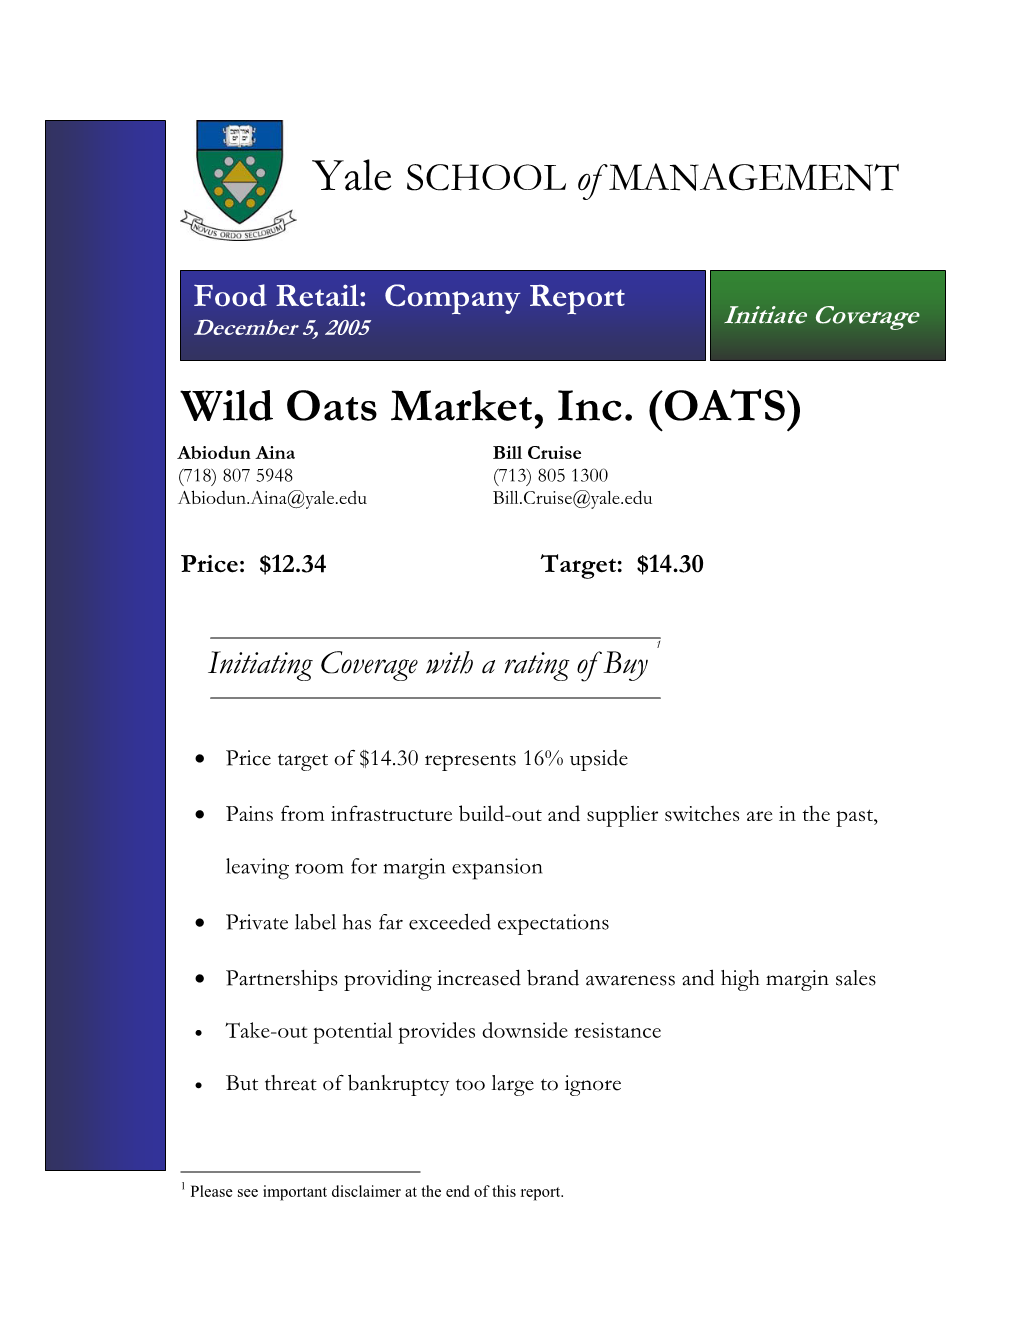 Wild Oats Market, Inc. (OATS) Abiodun Aina Bill Cruise (718) 807 5948 (713) 805 1300 Abiodun.Aina@Yale.Edu Bill.Cruise@Yale.Edu